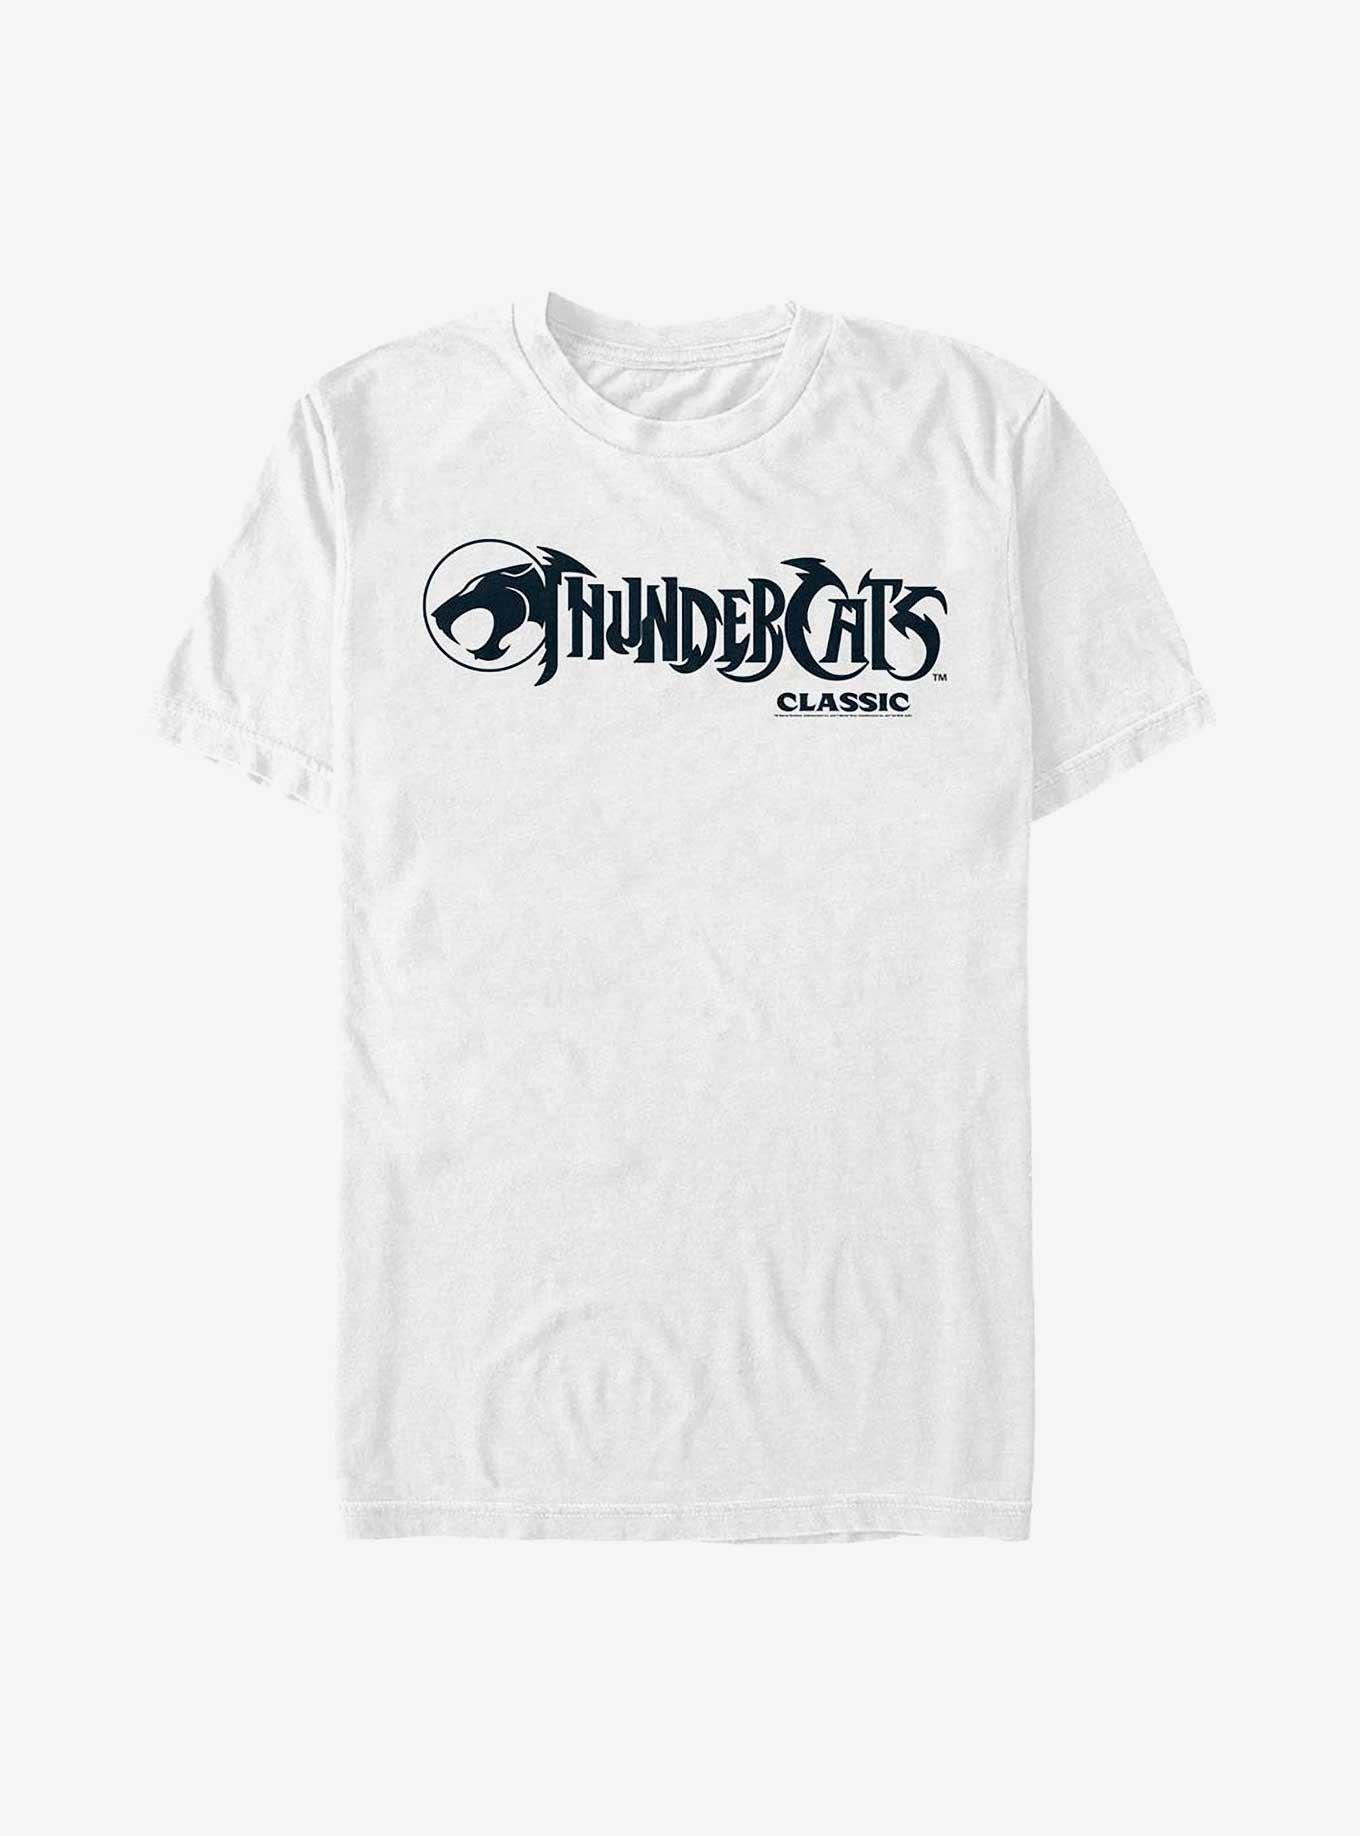 Thundercats Logo Black And White T-Shirt, WHITE, hi-res